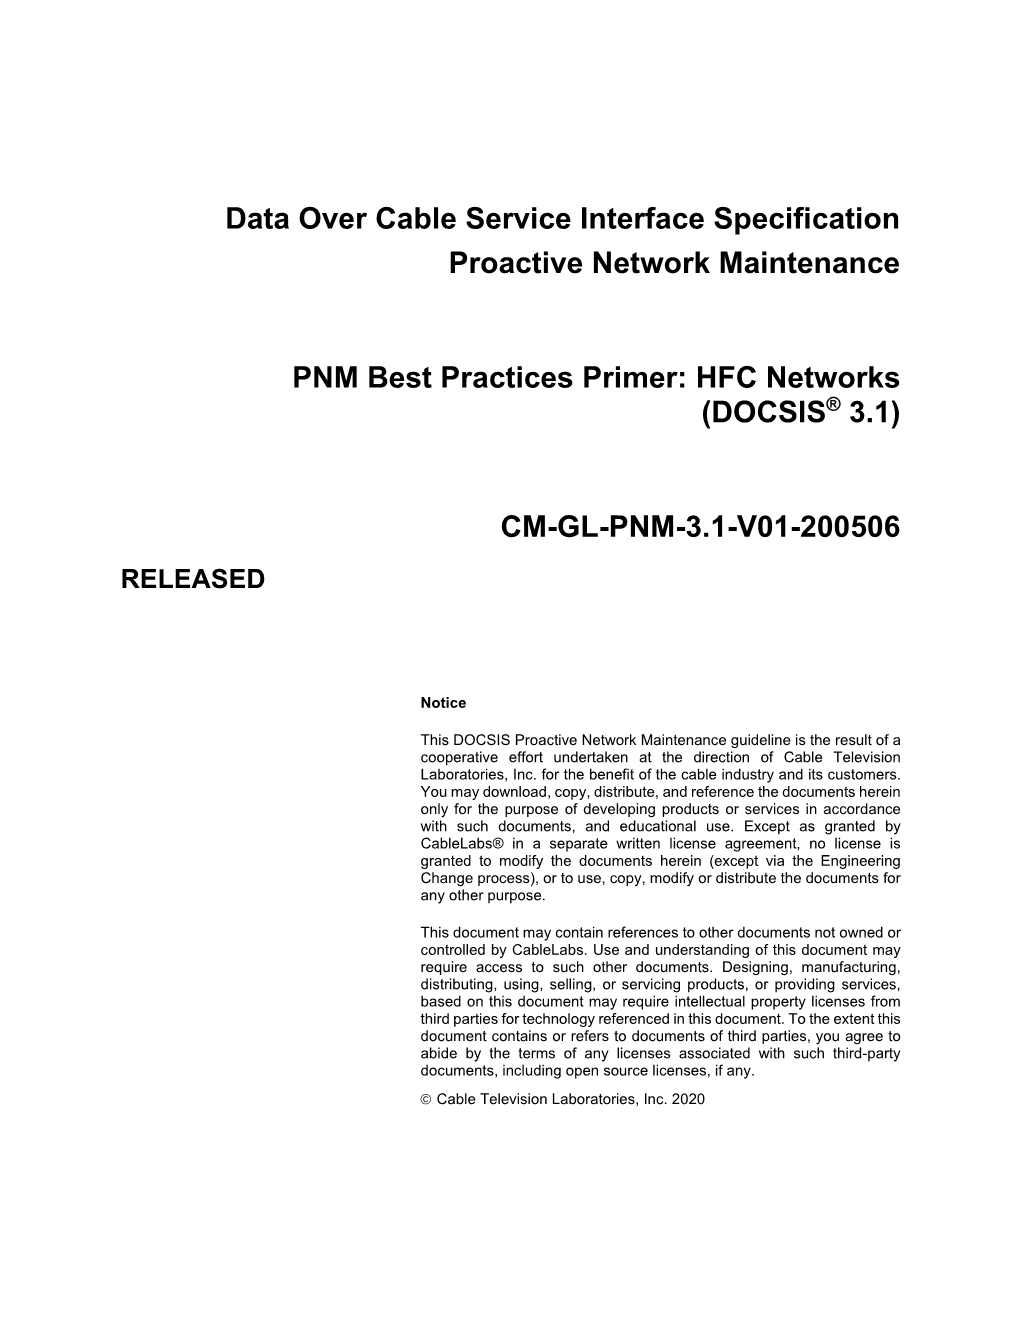 PNM Best Practices Primer: HFC Networks (DOCSIS 3.1)